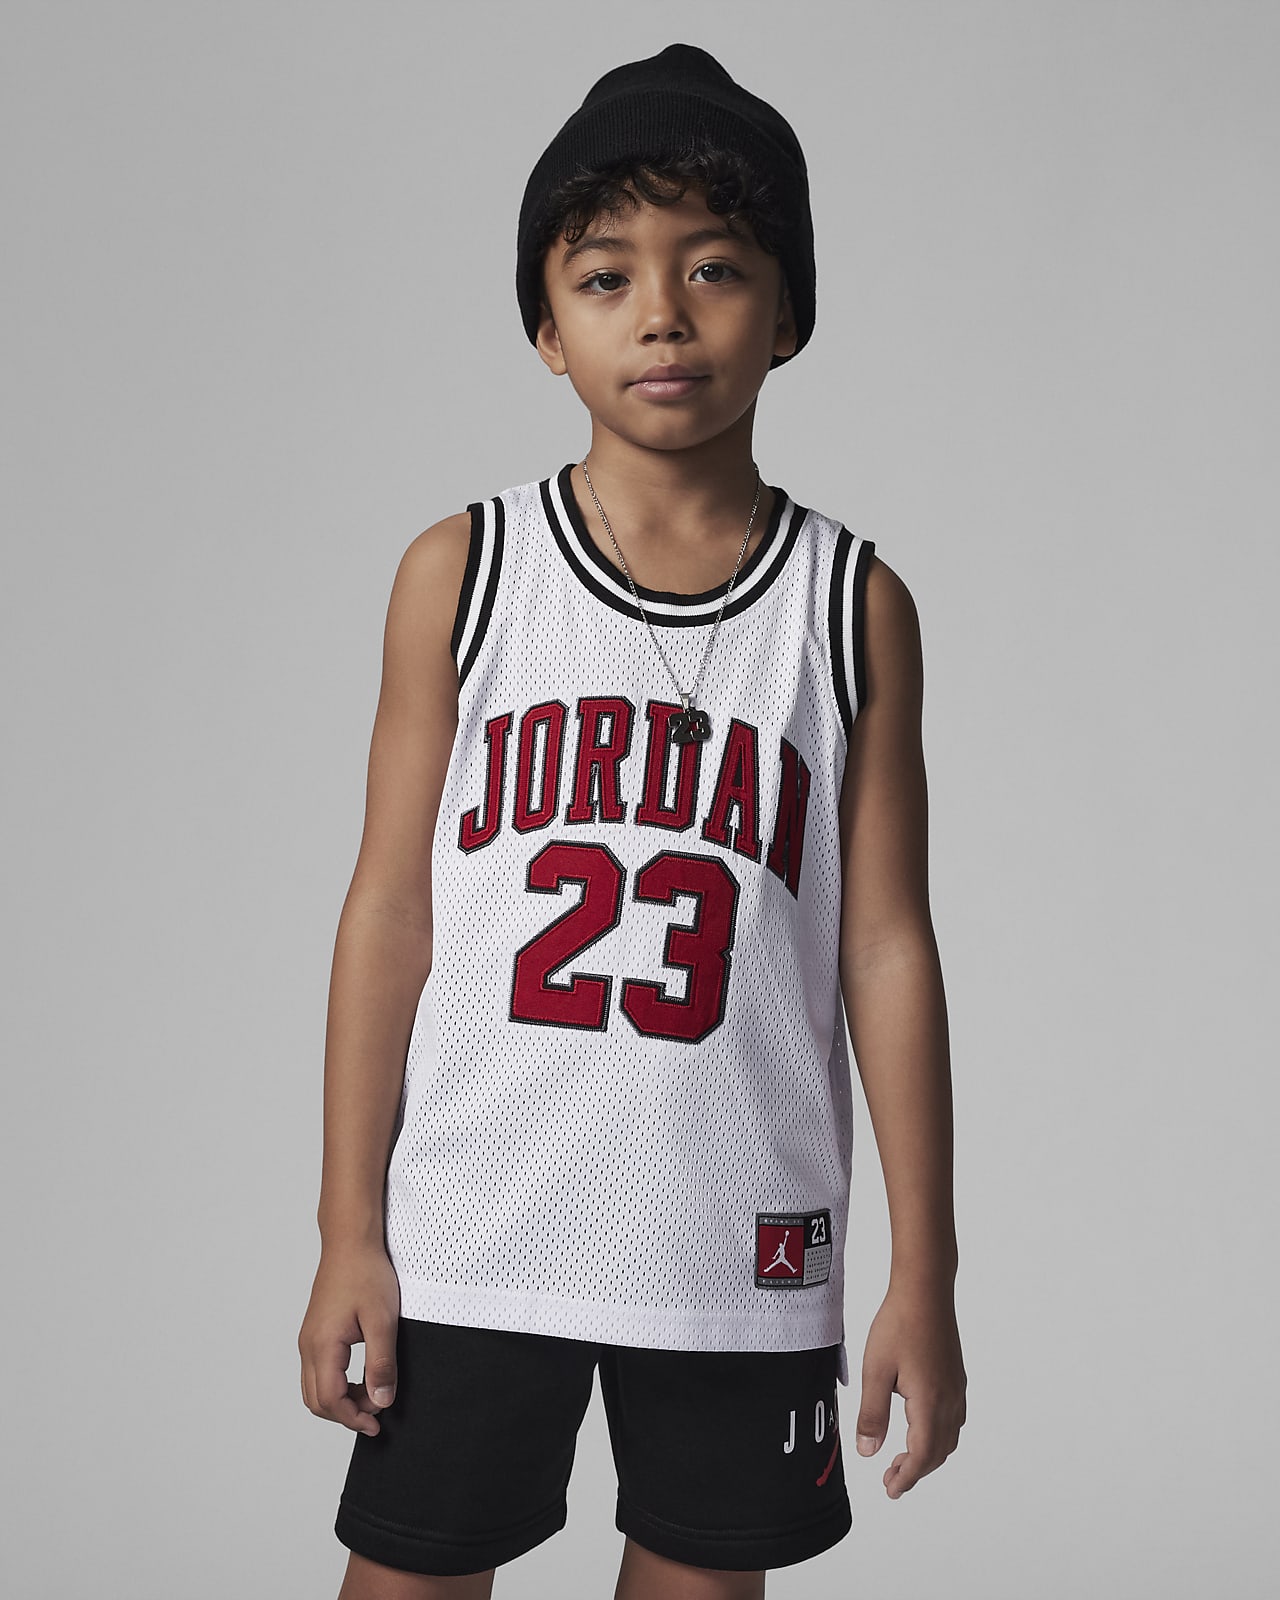 Playera niños talla Jordan 23 Jersey. Nike.com